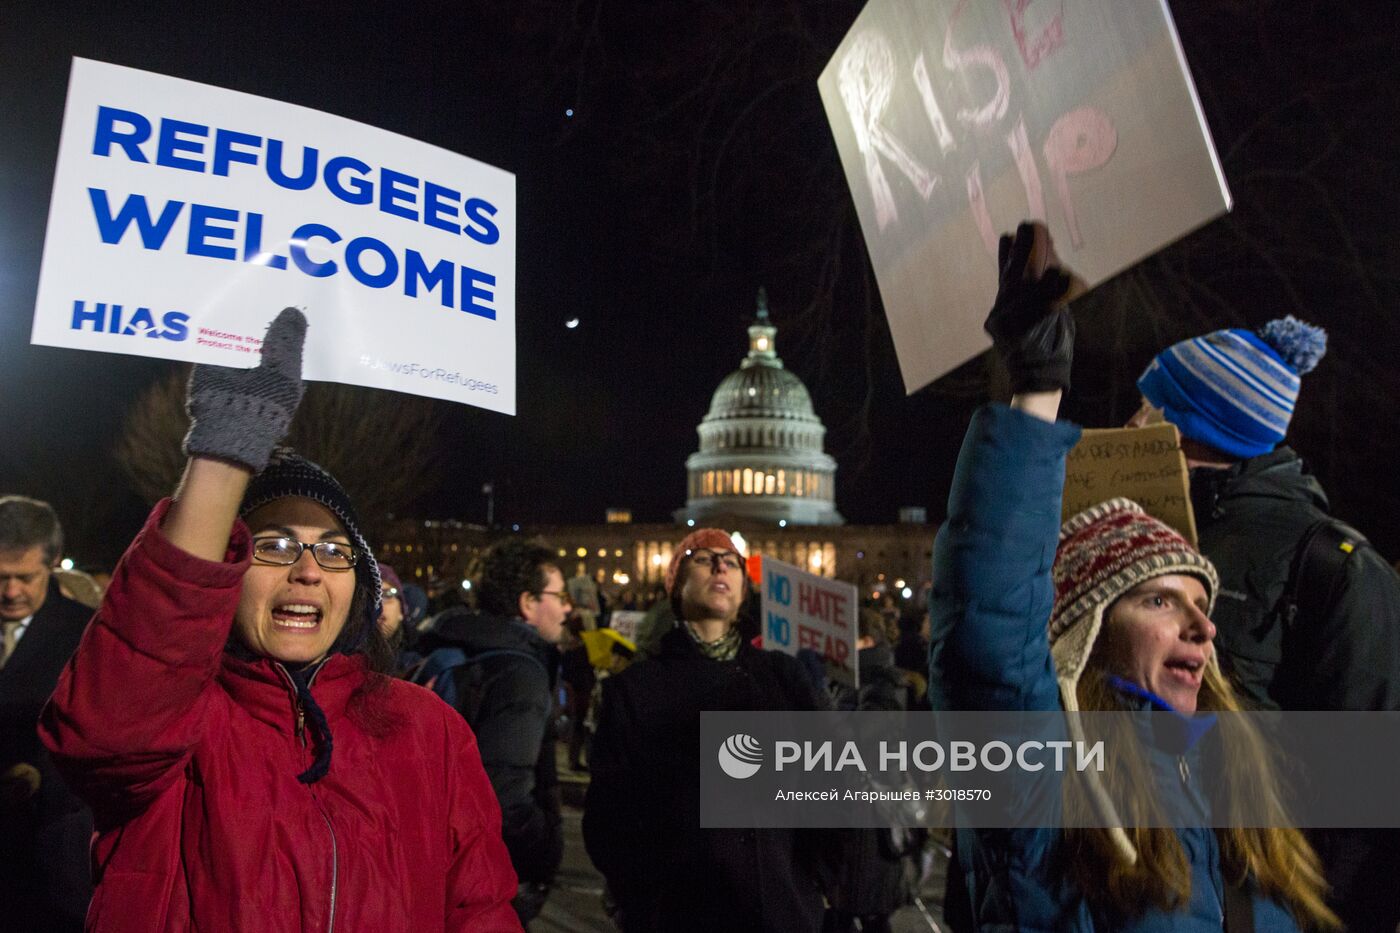 Митинг против указа Трампа об эмигрантах в Вашингтоне